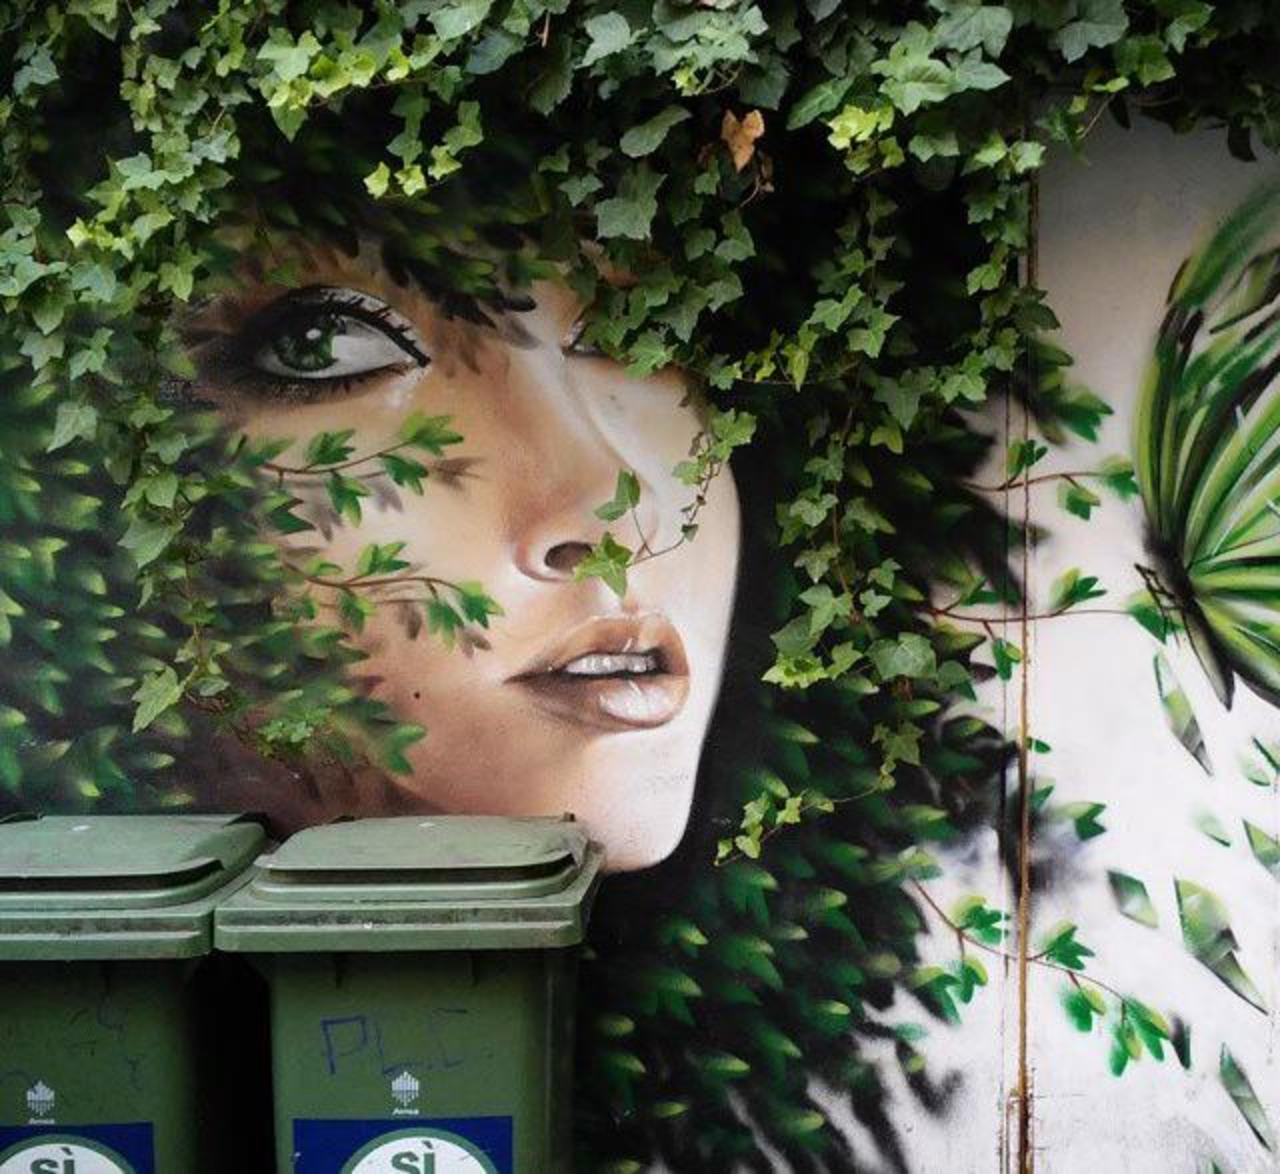 When Street Art meets nature by Dasxa in Isola, Millan 

#art #arte #graffiti #streetart http://t.co/l6XHRdJ82a